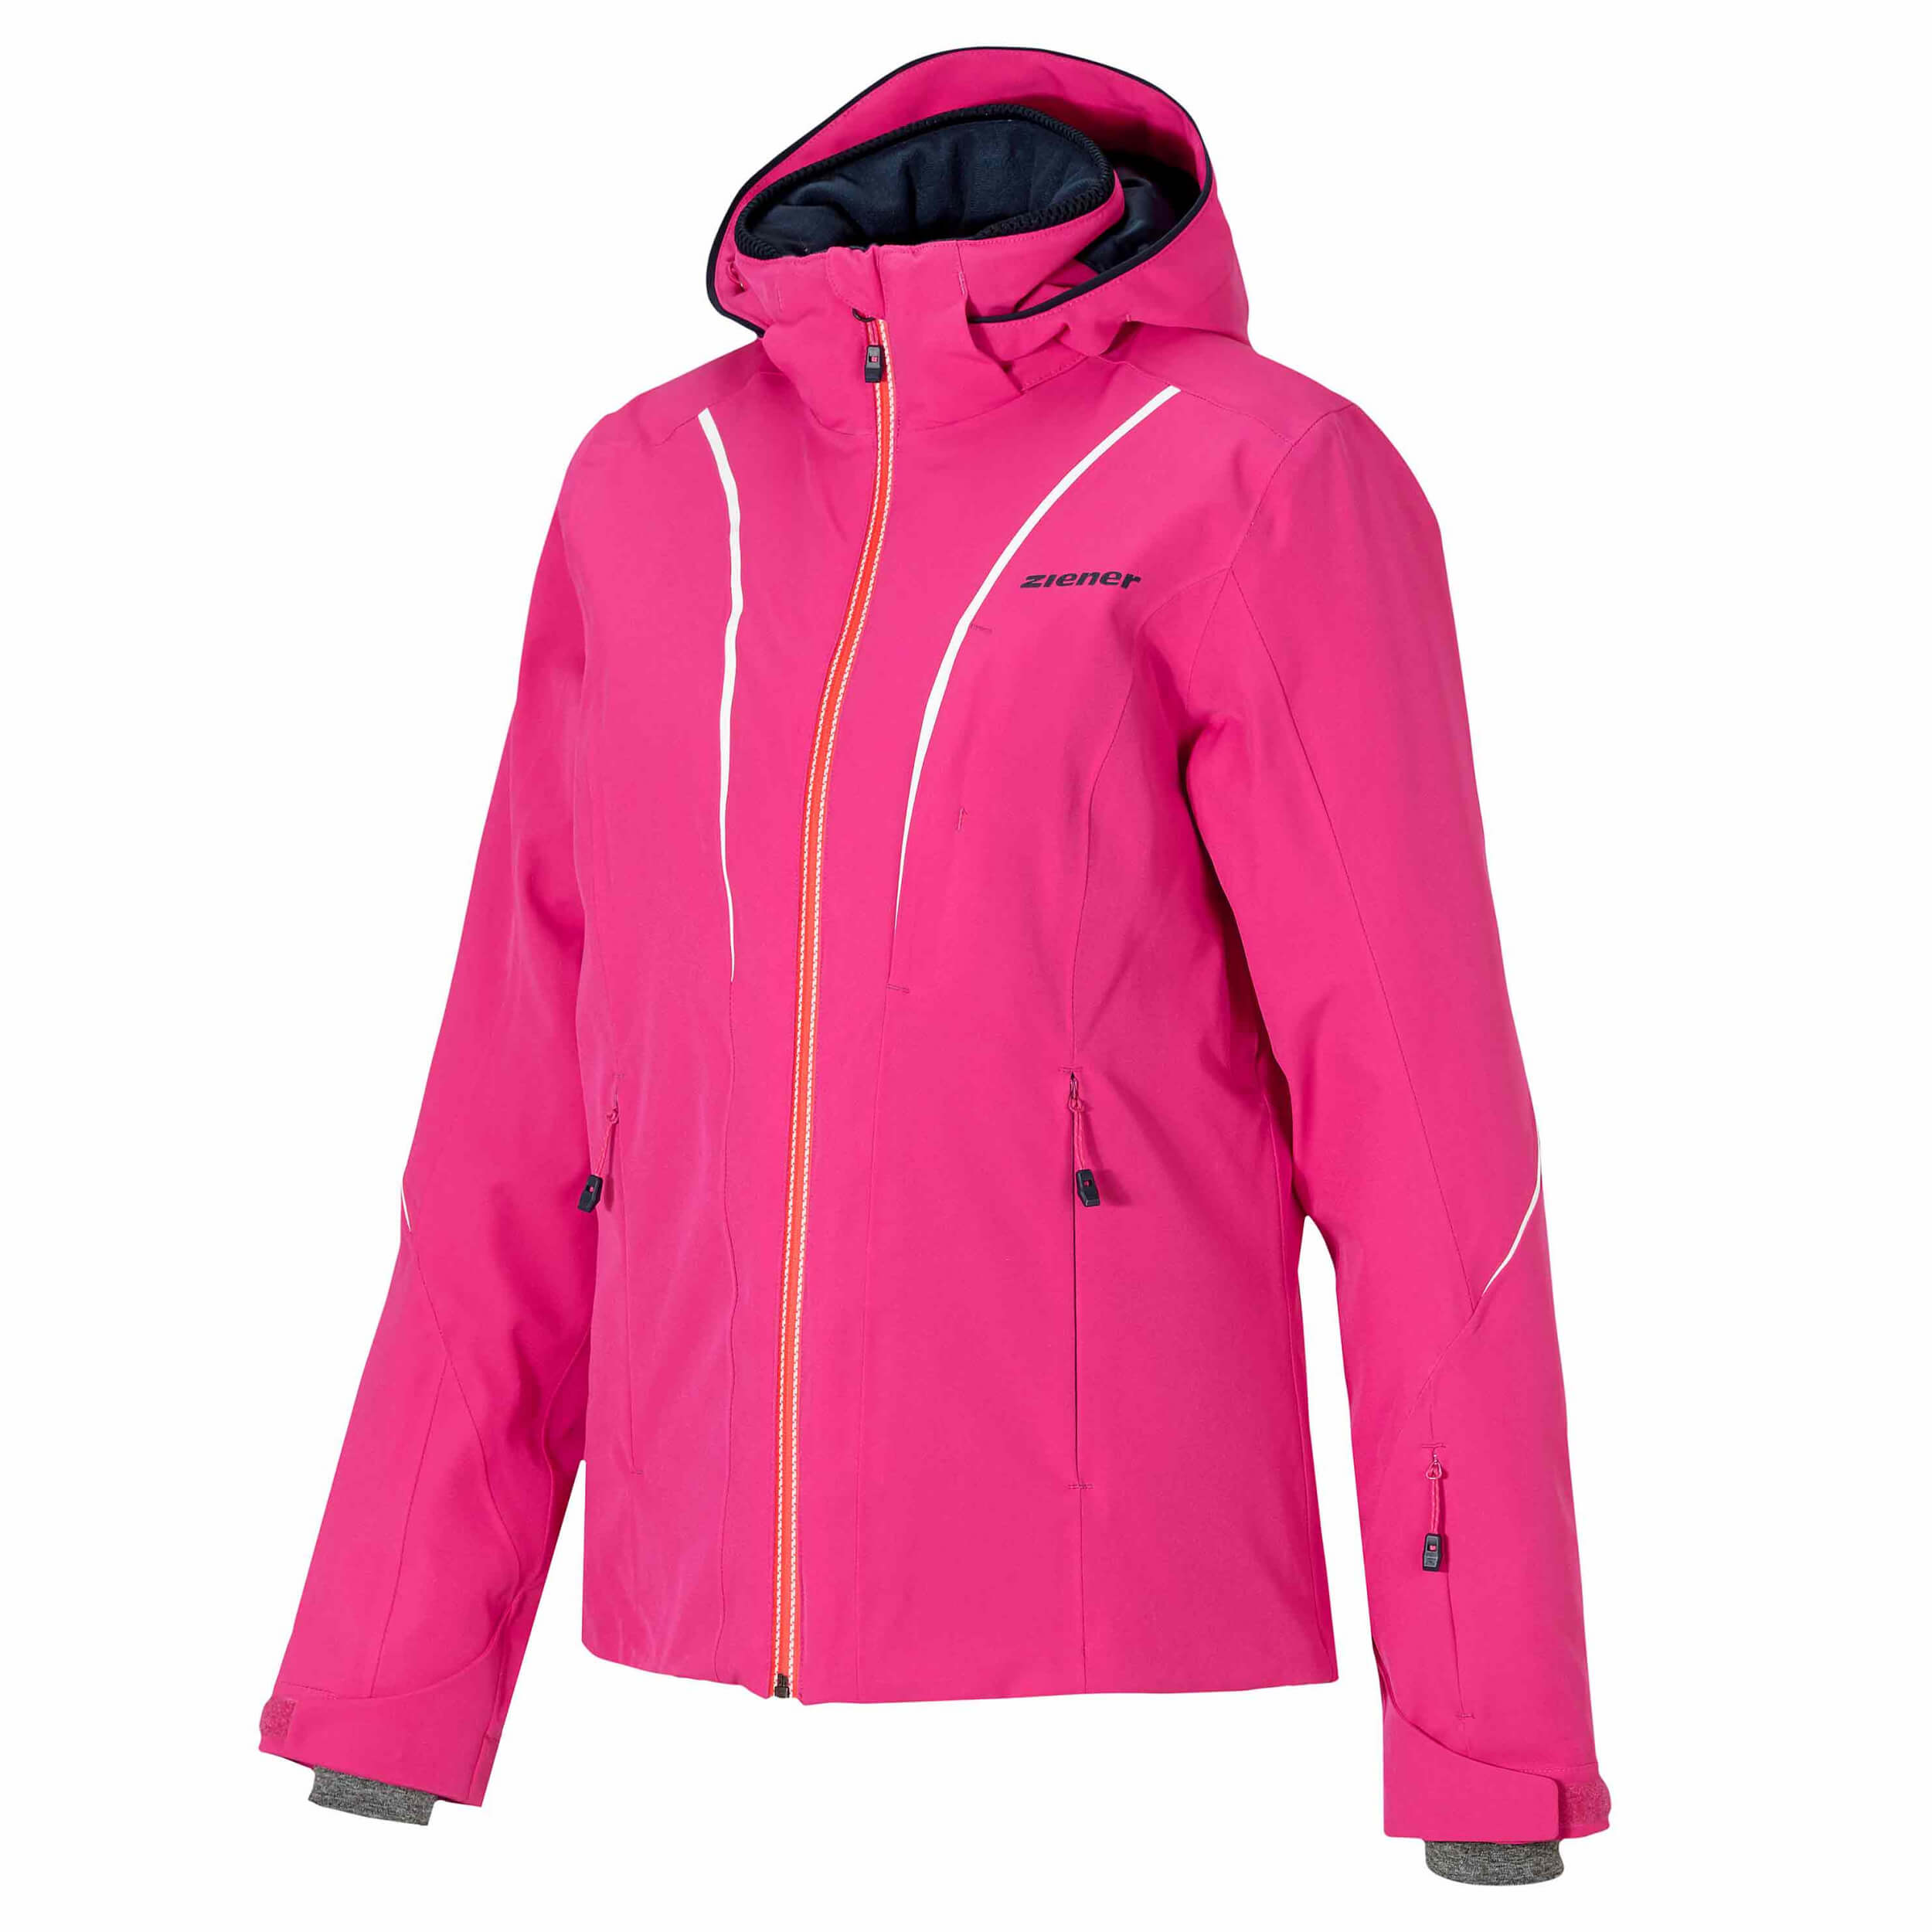 Ziener Women's Ski Jacket Tilda Lady Aquashield Pink 861 New | eBay